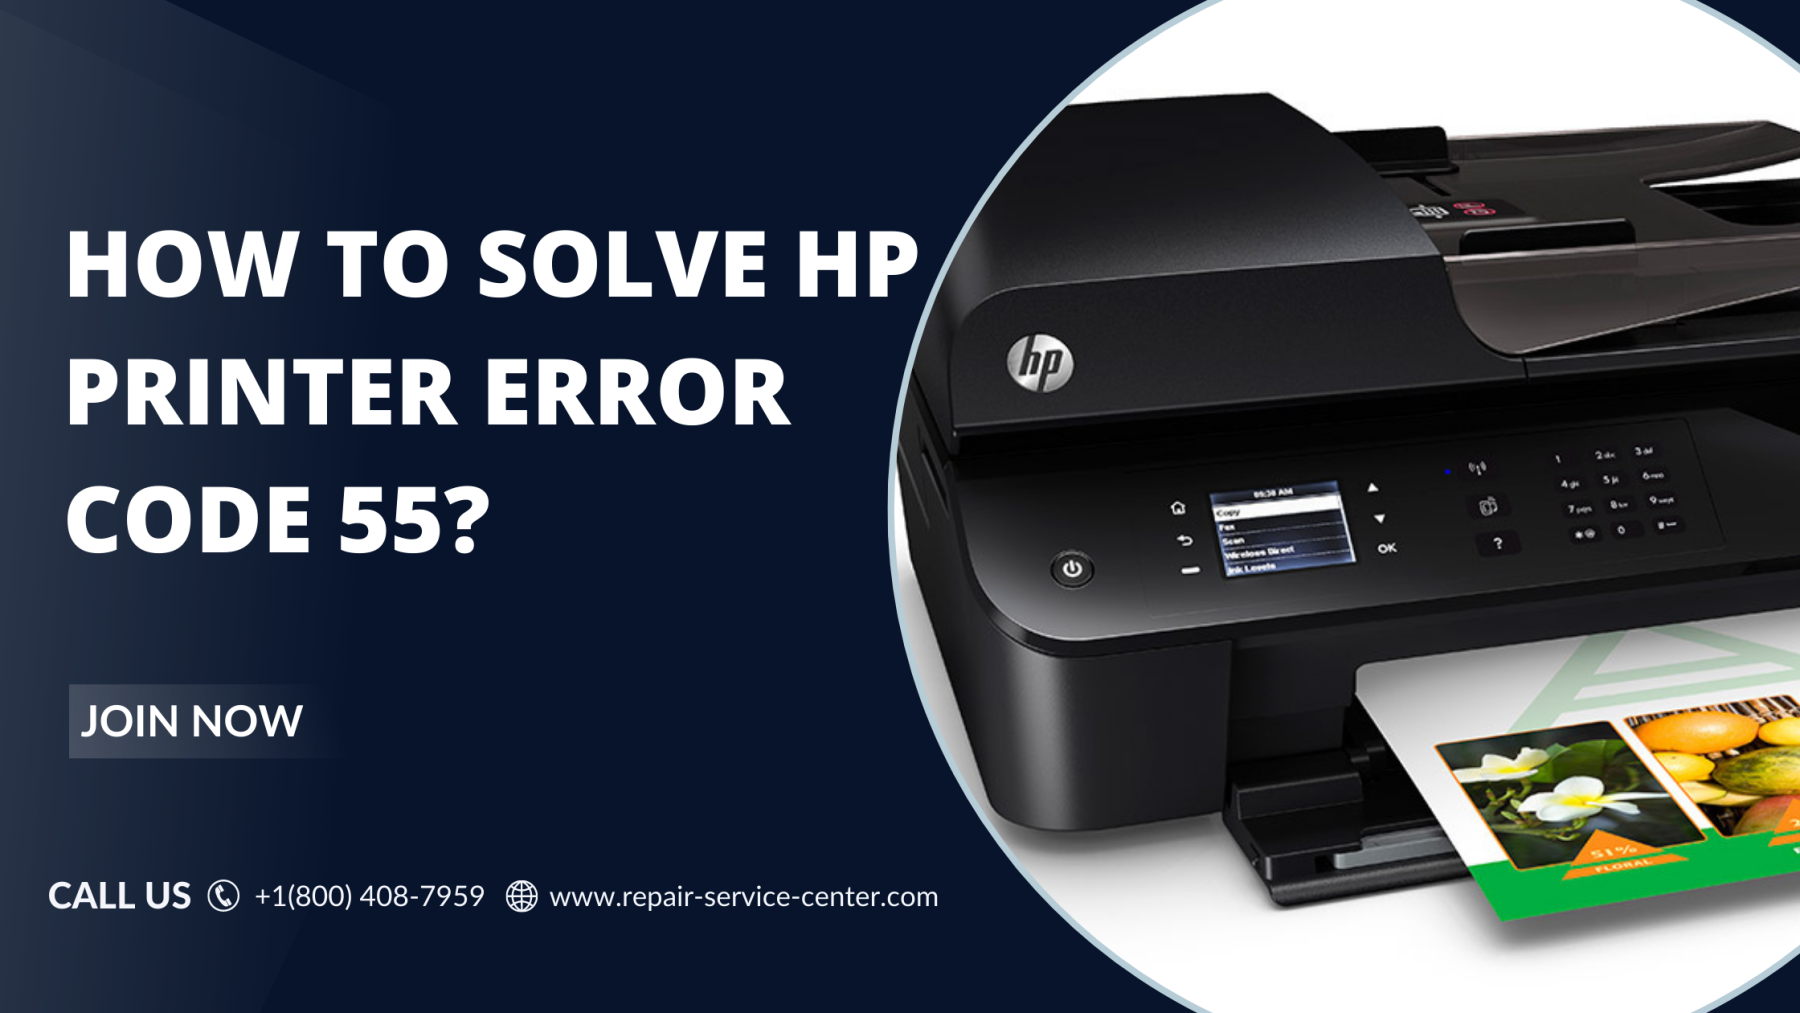 HOW TO SOLVE HP PRINTER ERROR CODE 55 Repair Service Center Blog